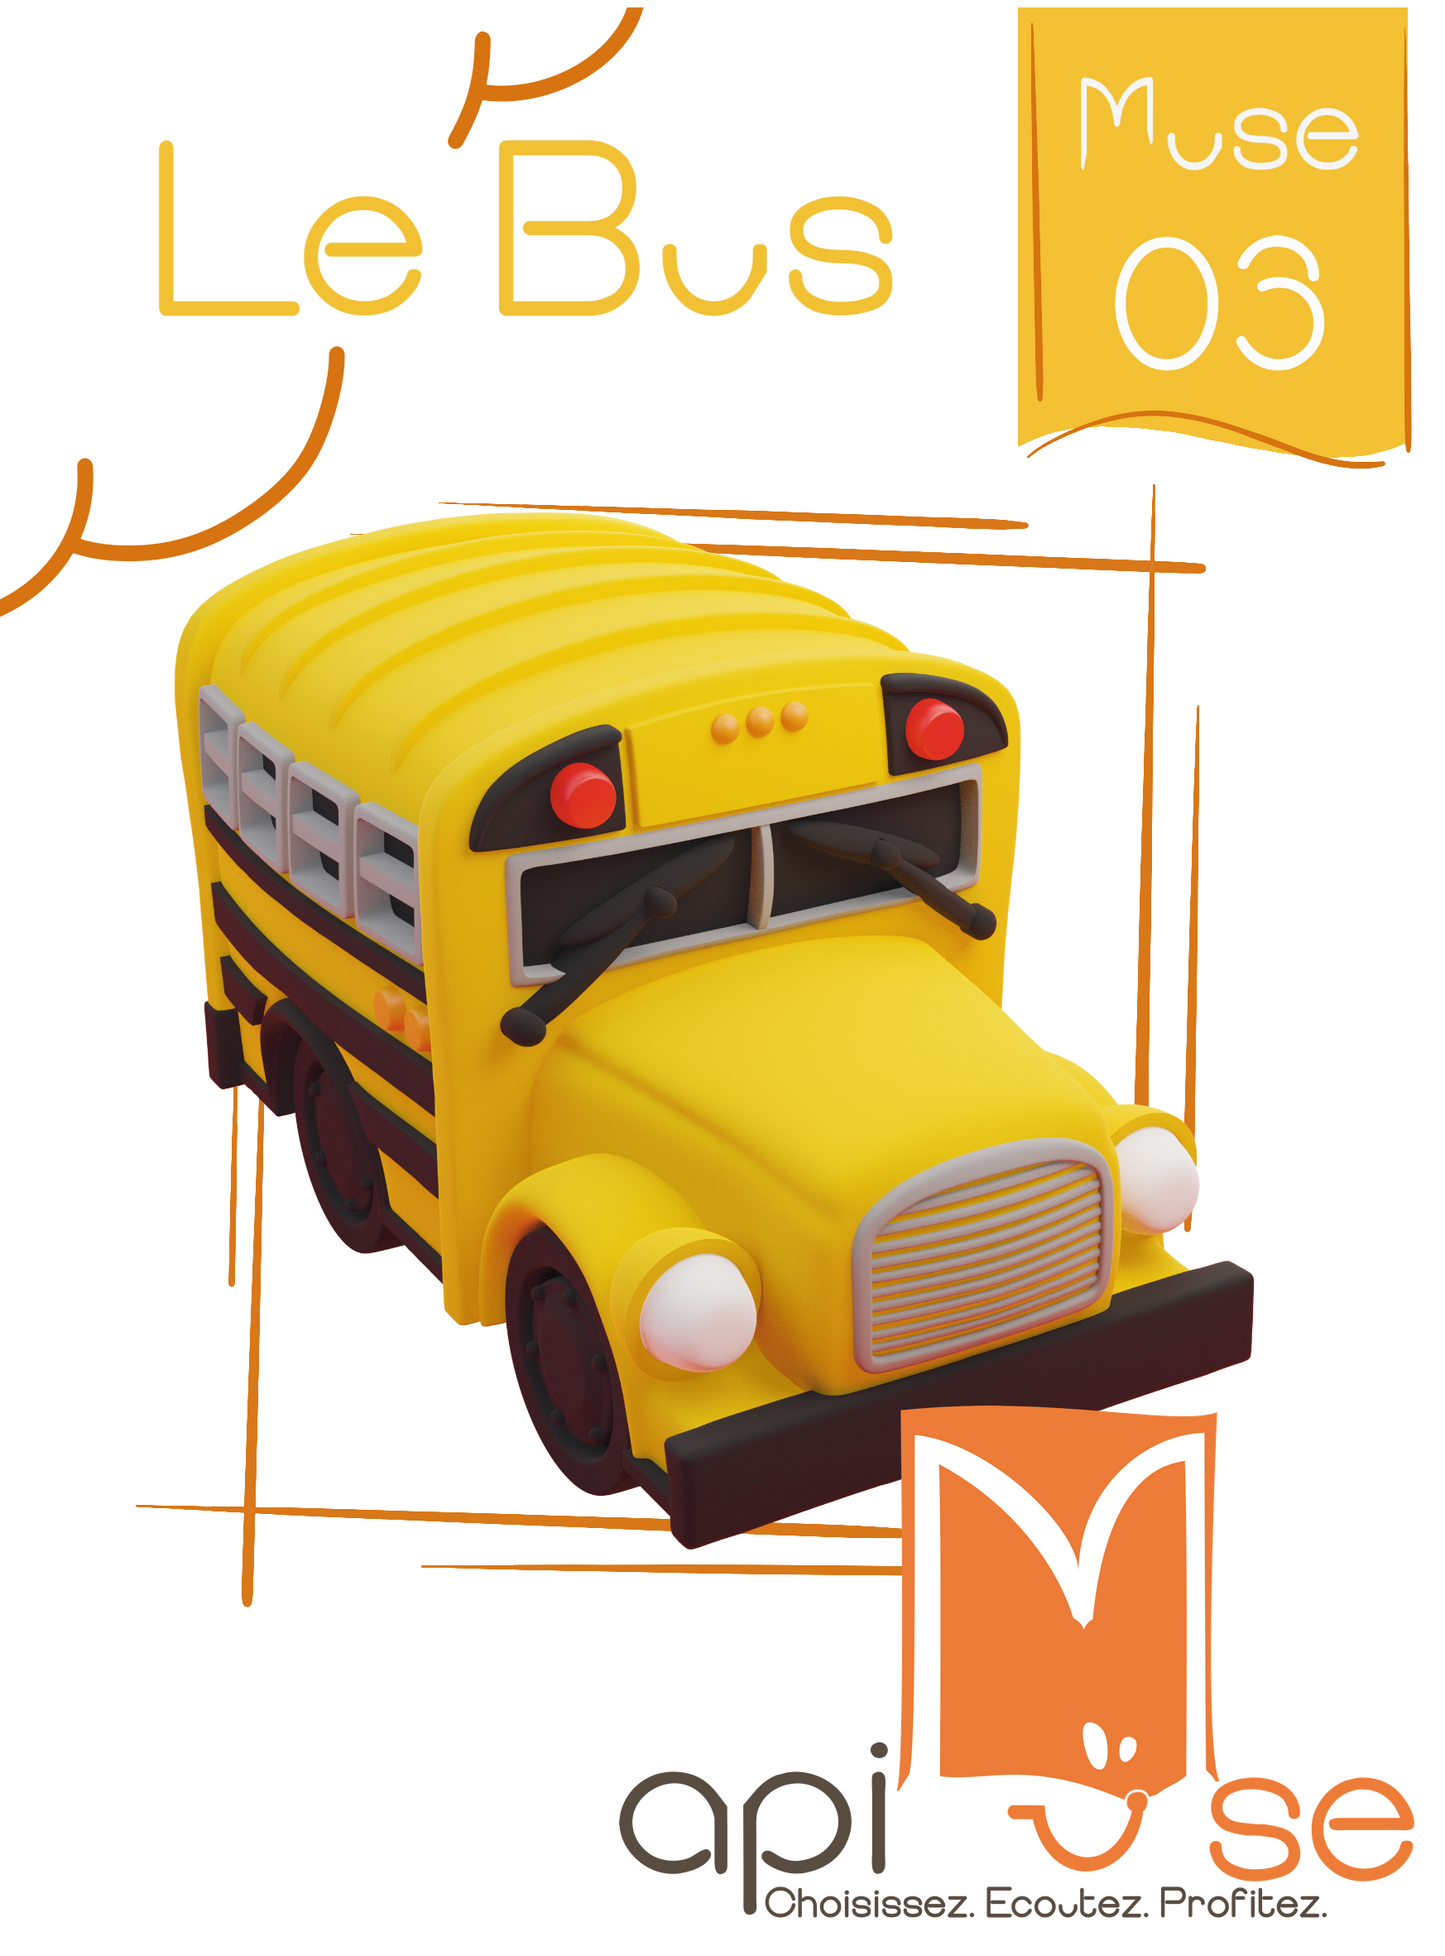 La Muse Bus